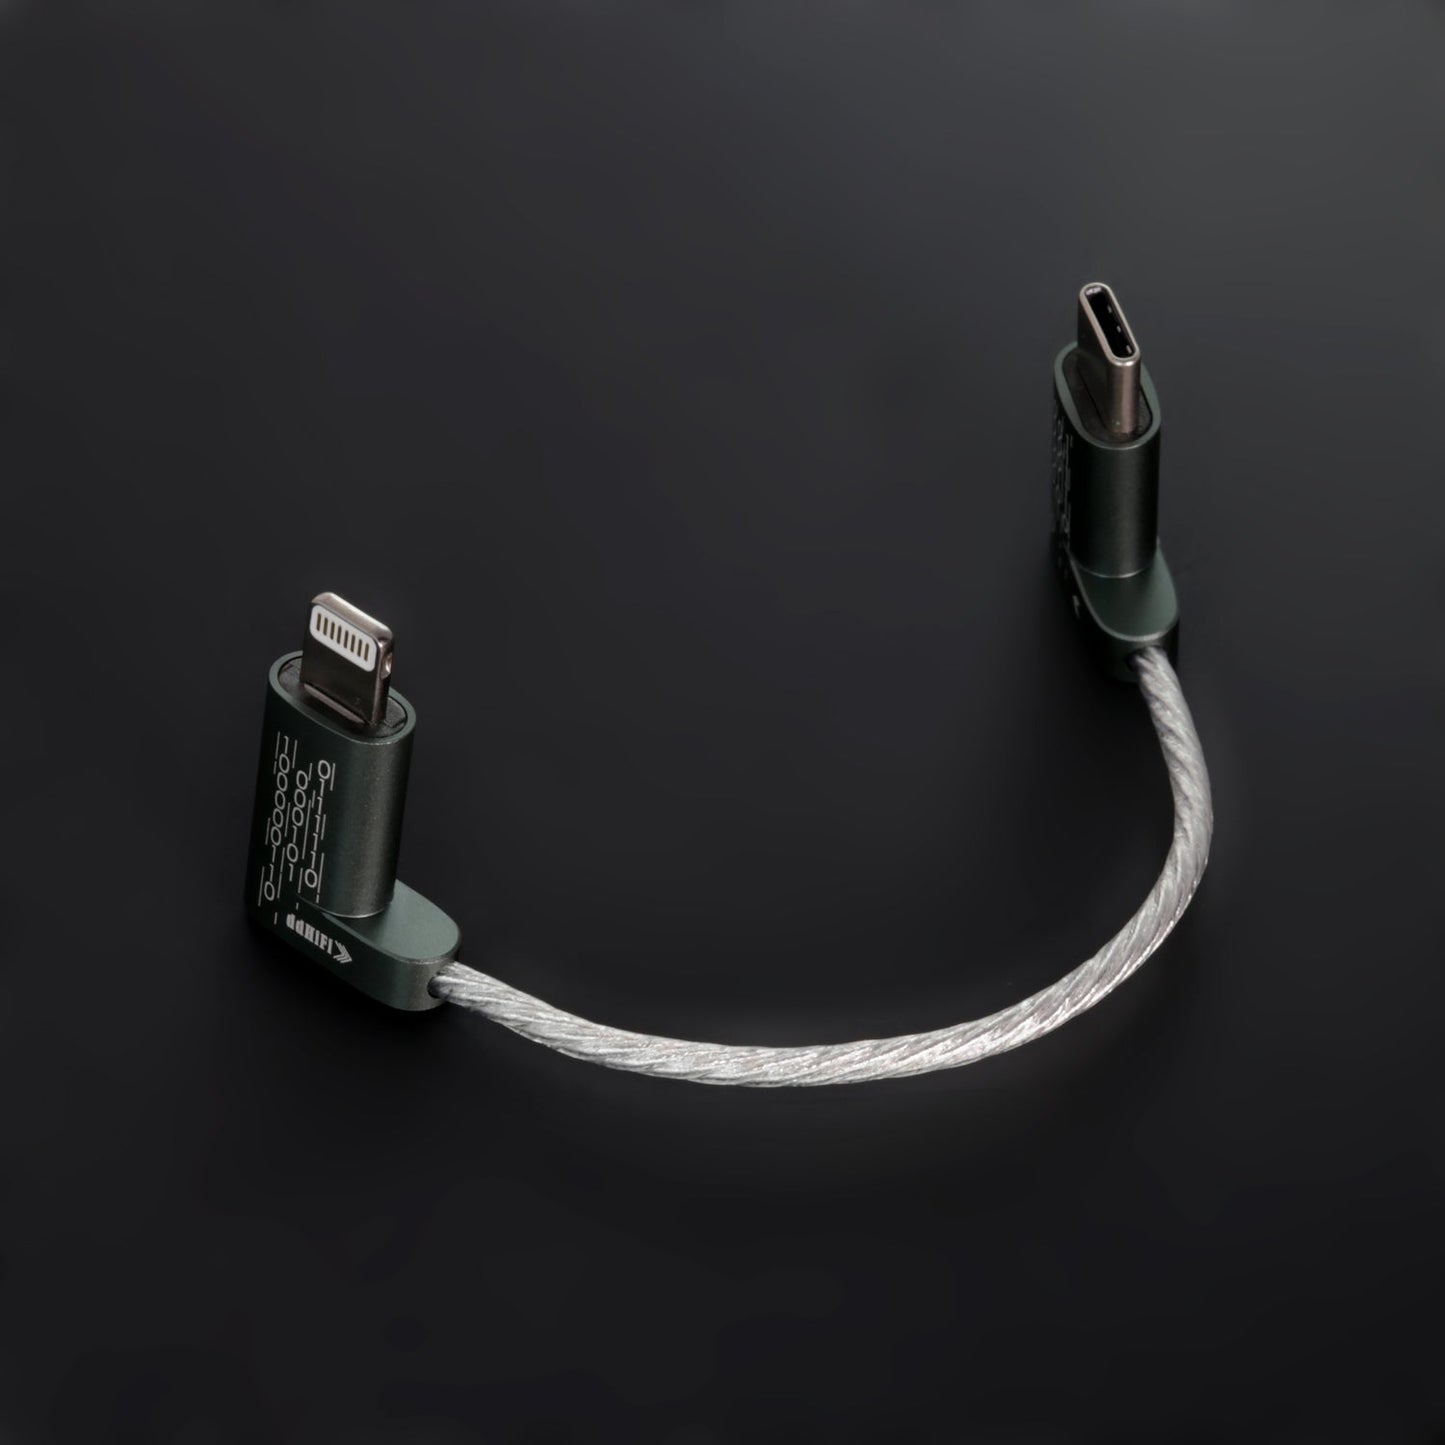 ddHiFi MFi06 Lightning to Type C USB DAC Cable